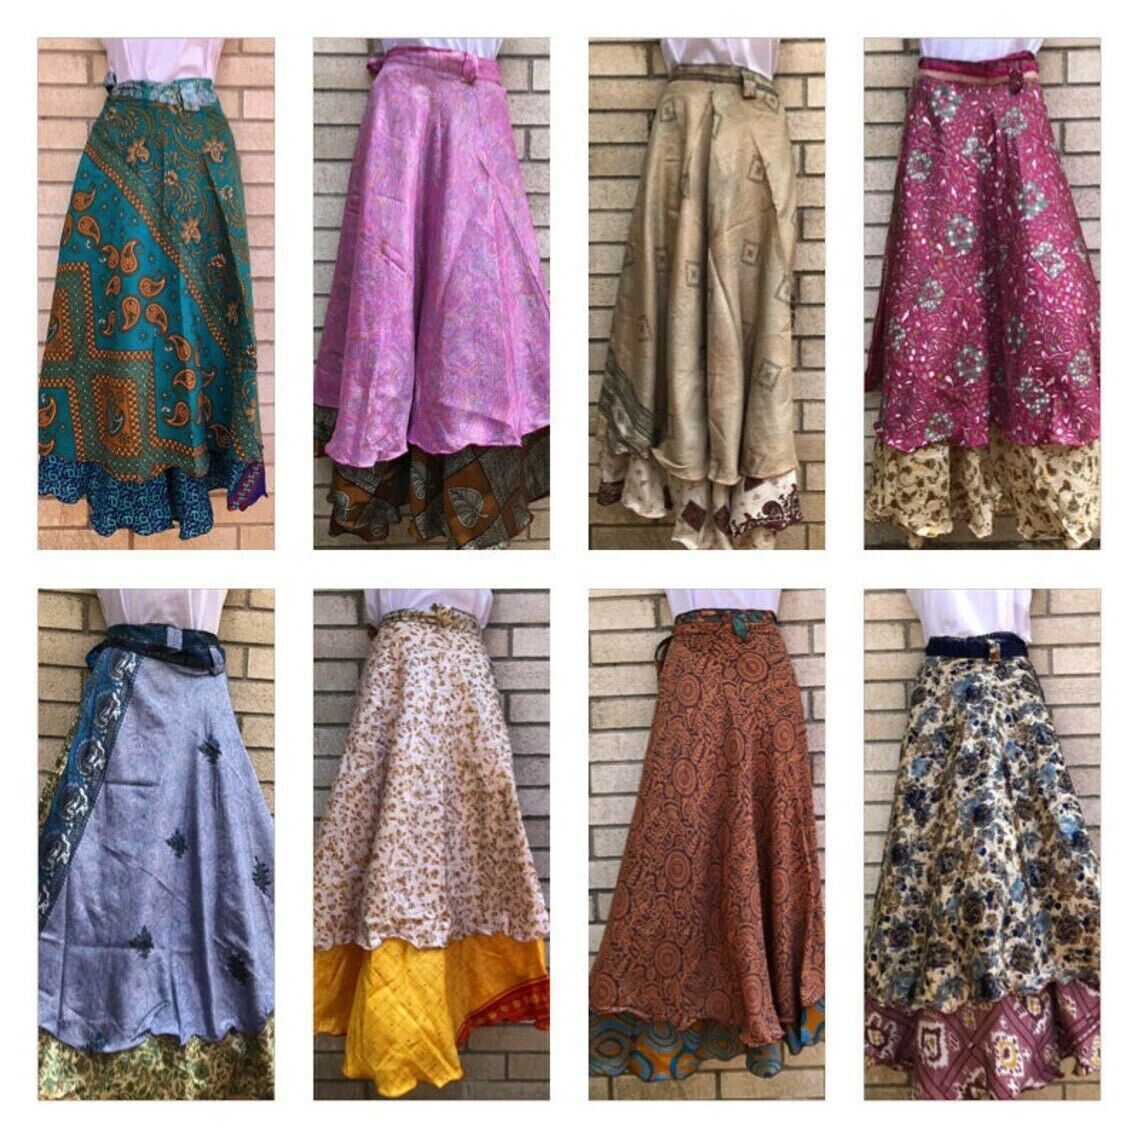 Wrap Around Indian Sari Skirt - Handmade Fair Trade from Siesta